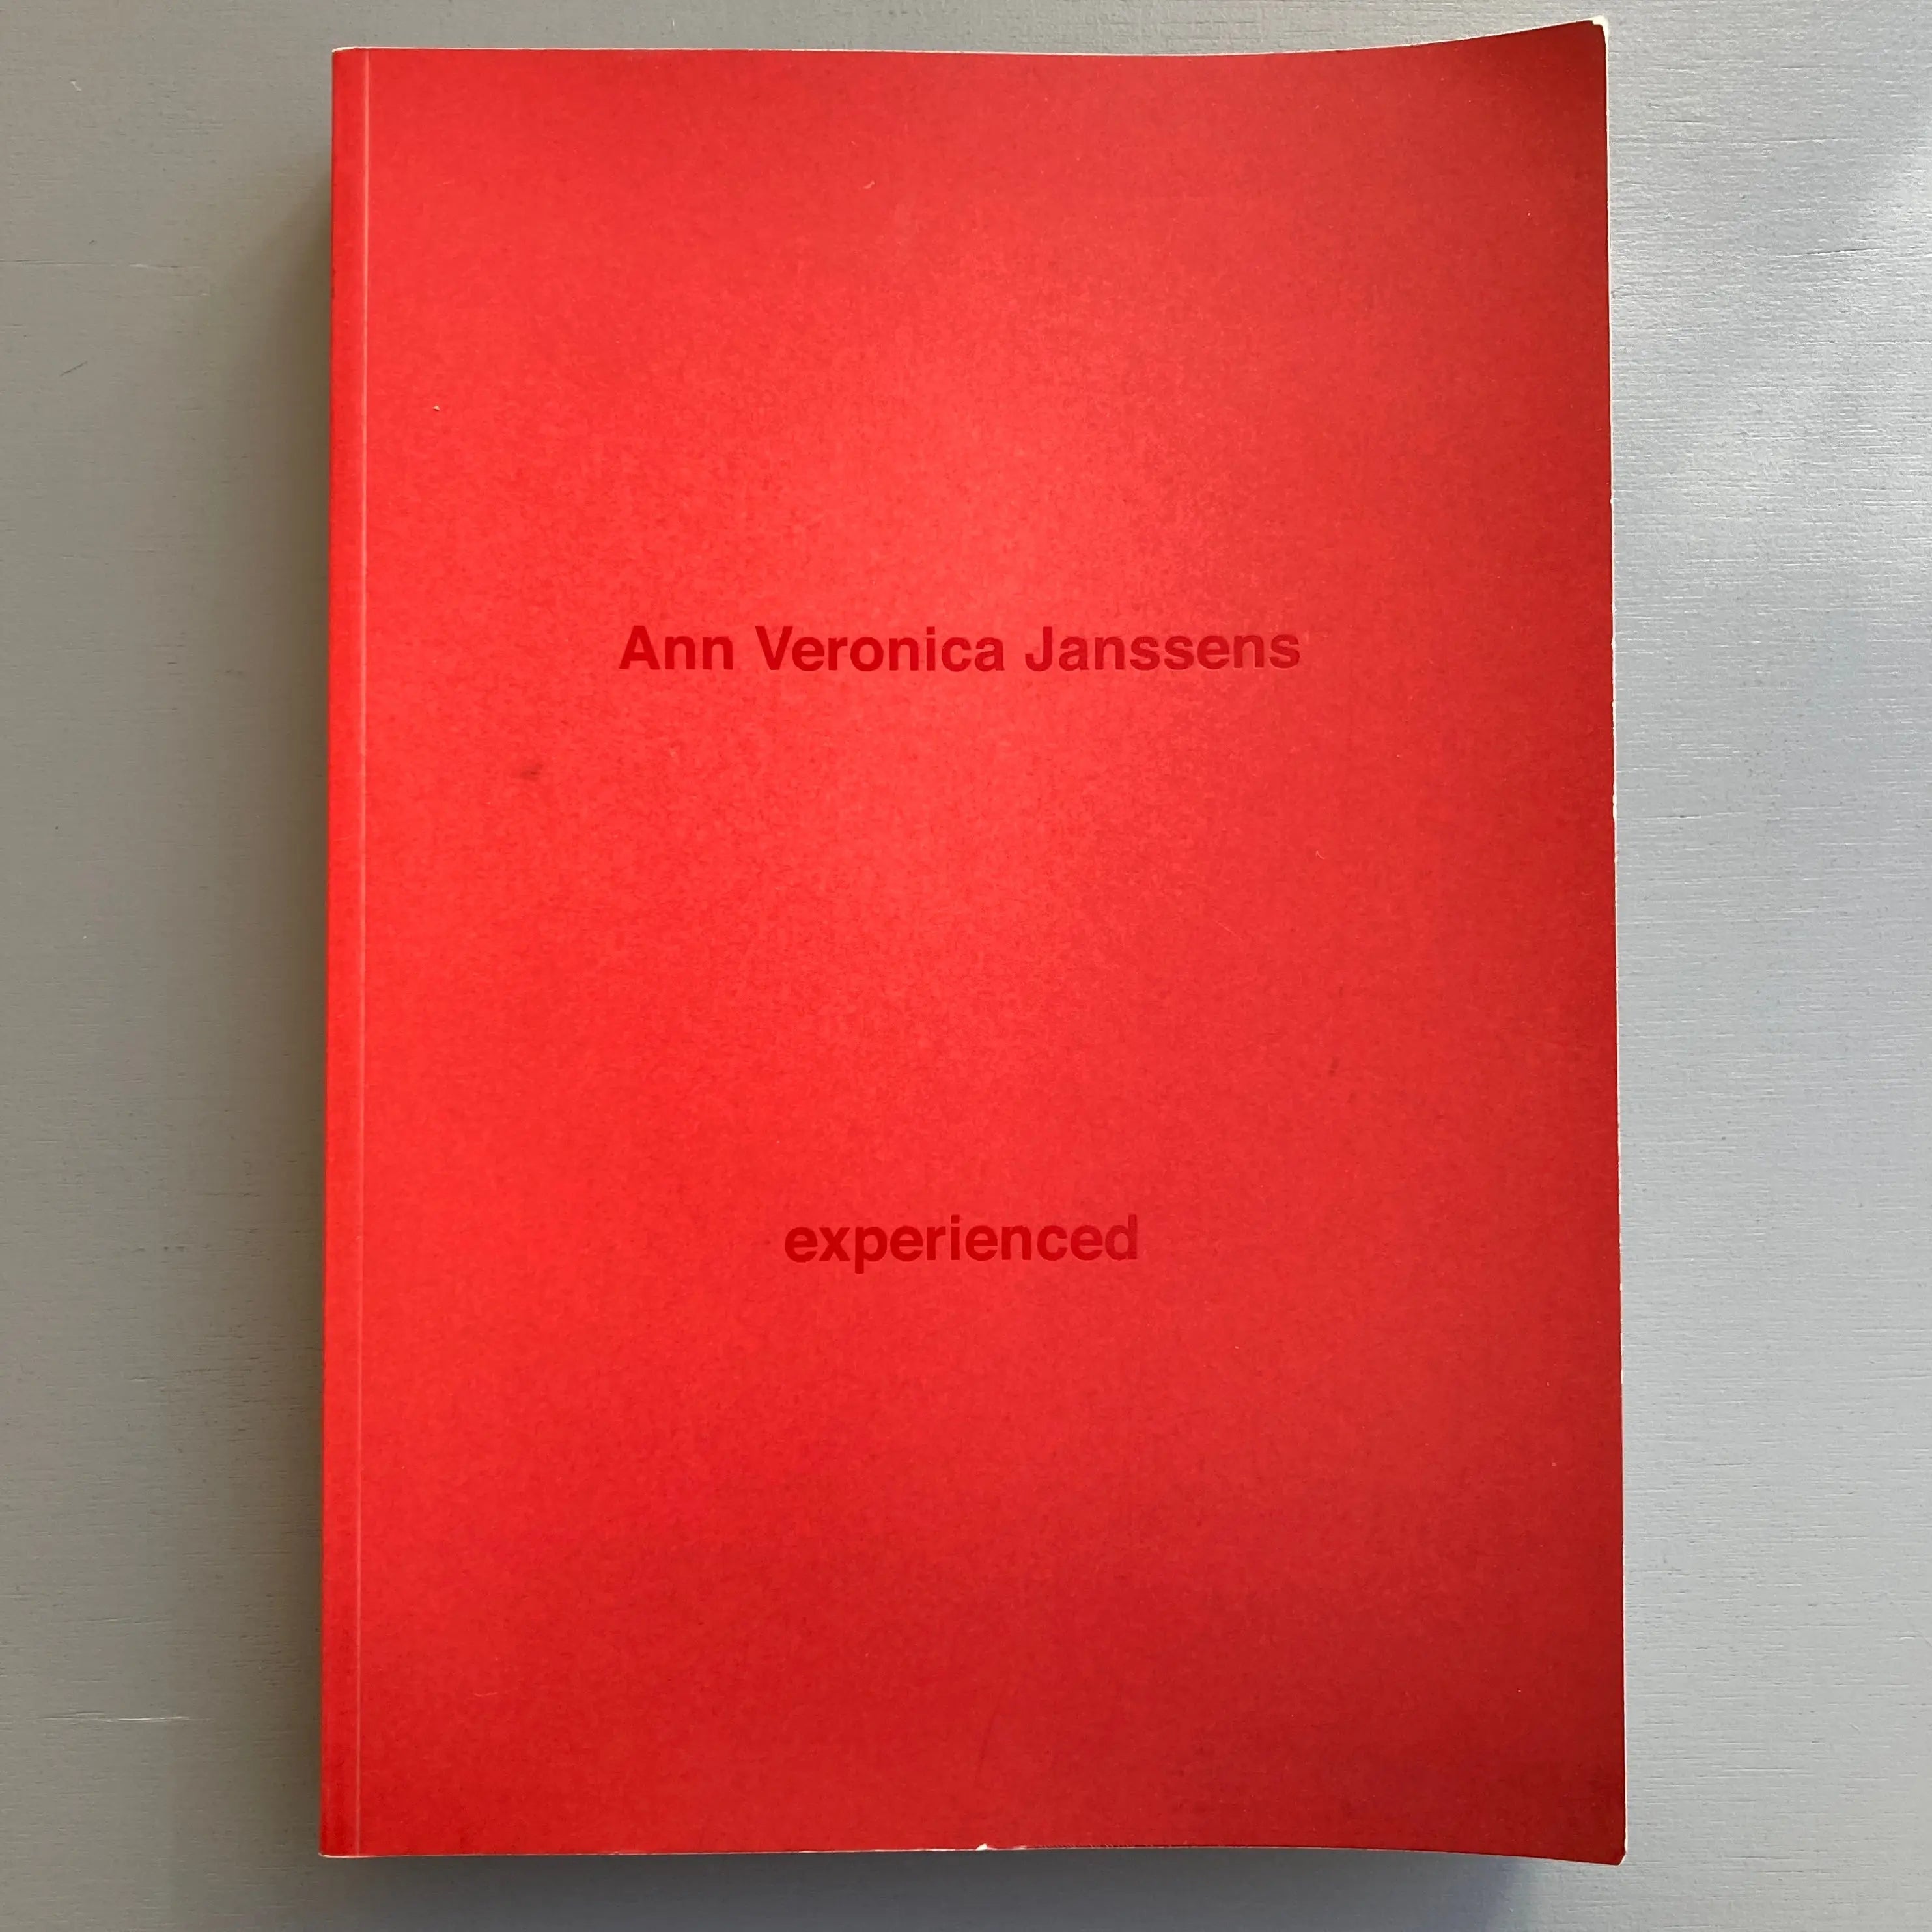 Ann Veronica Janssens - experienced - BasePublishing 2009